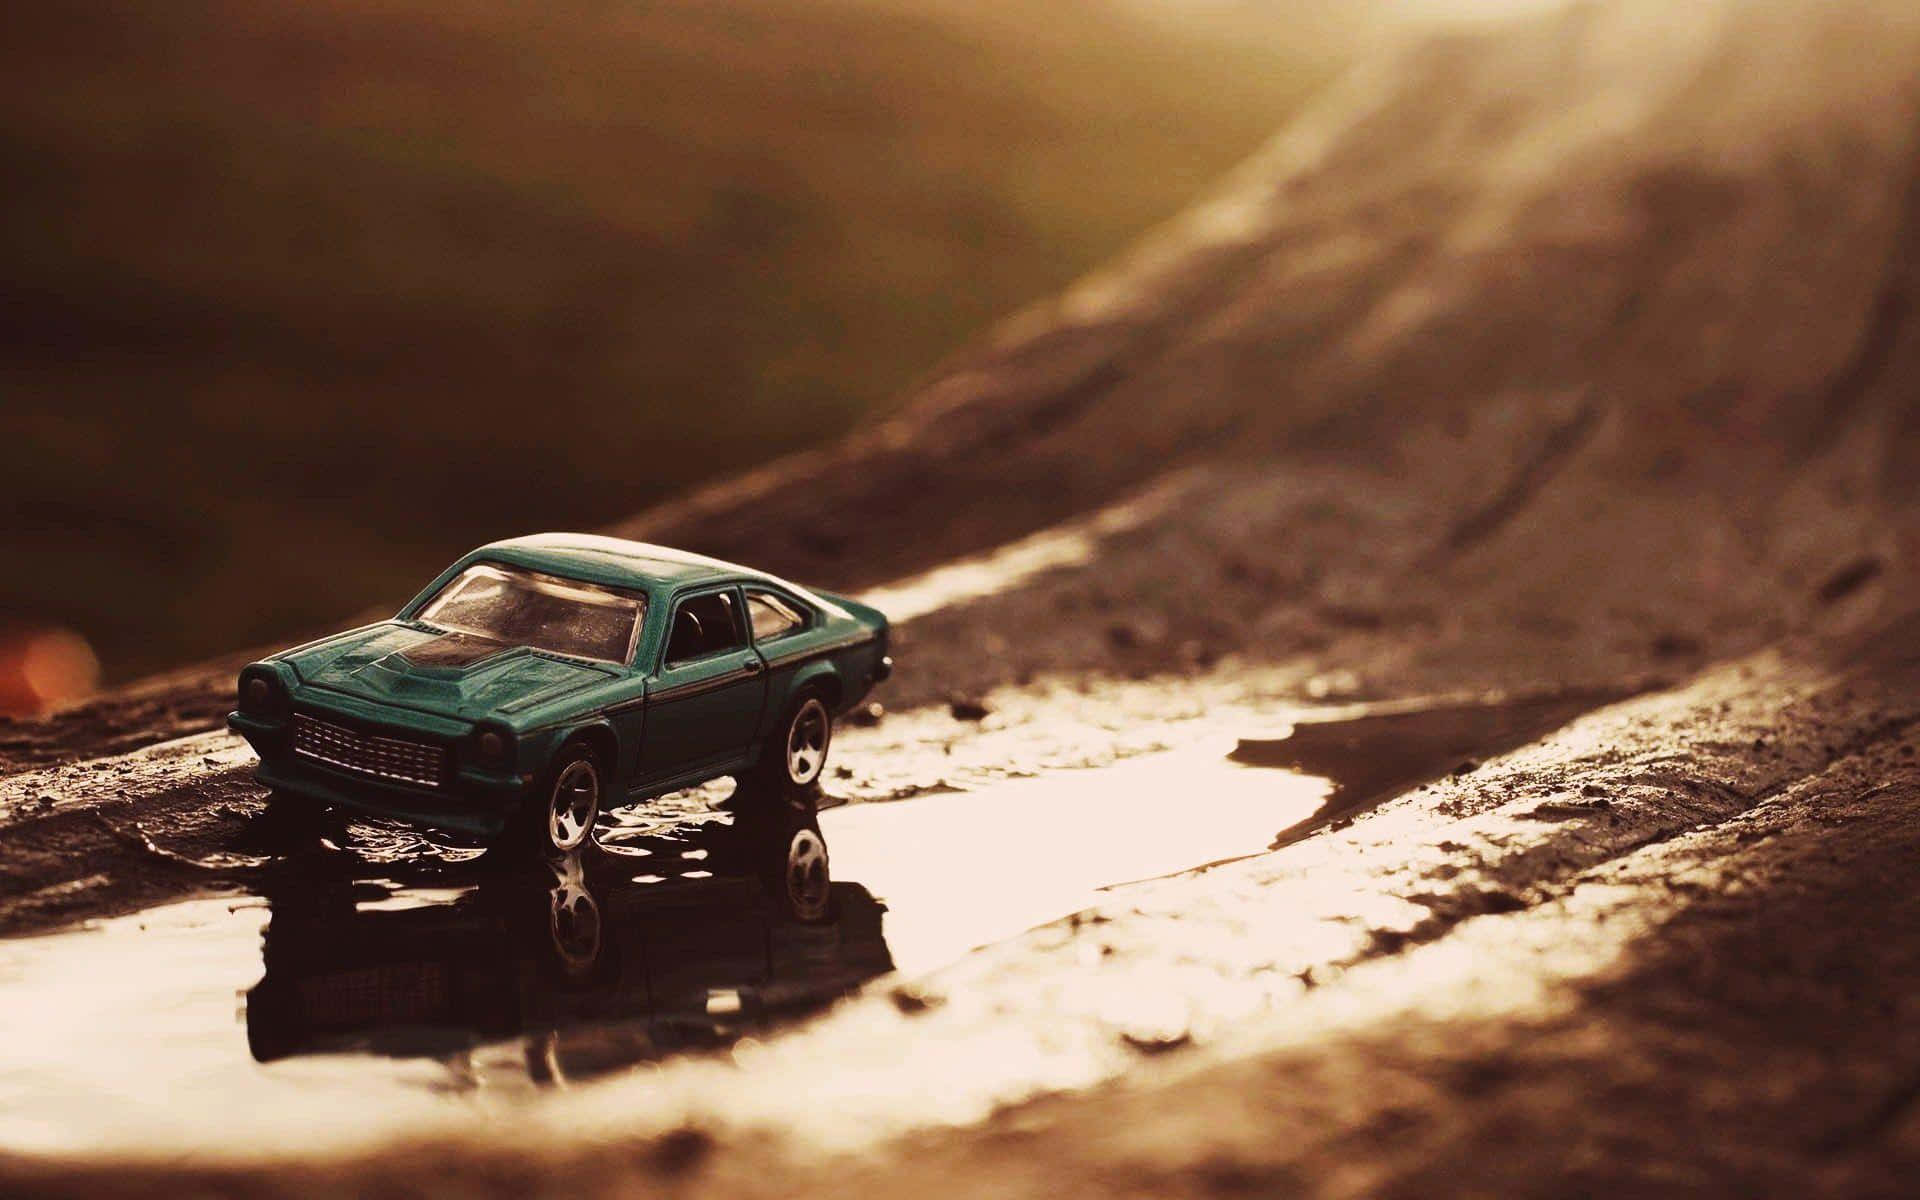 Toy Car Sunset Adventure.jpg Wallpaper